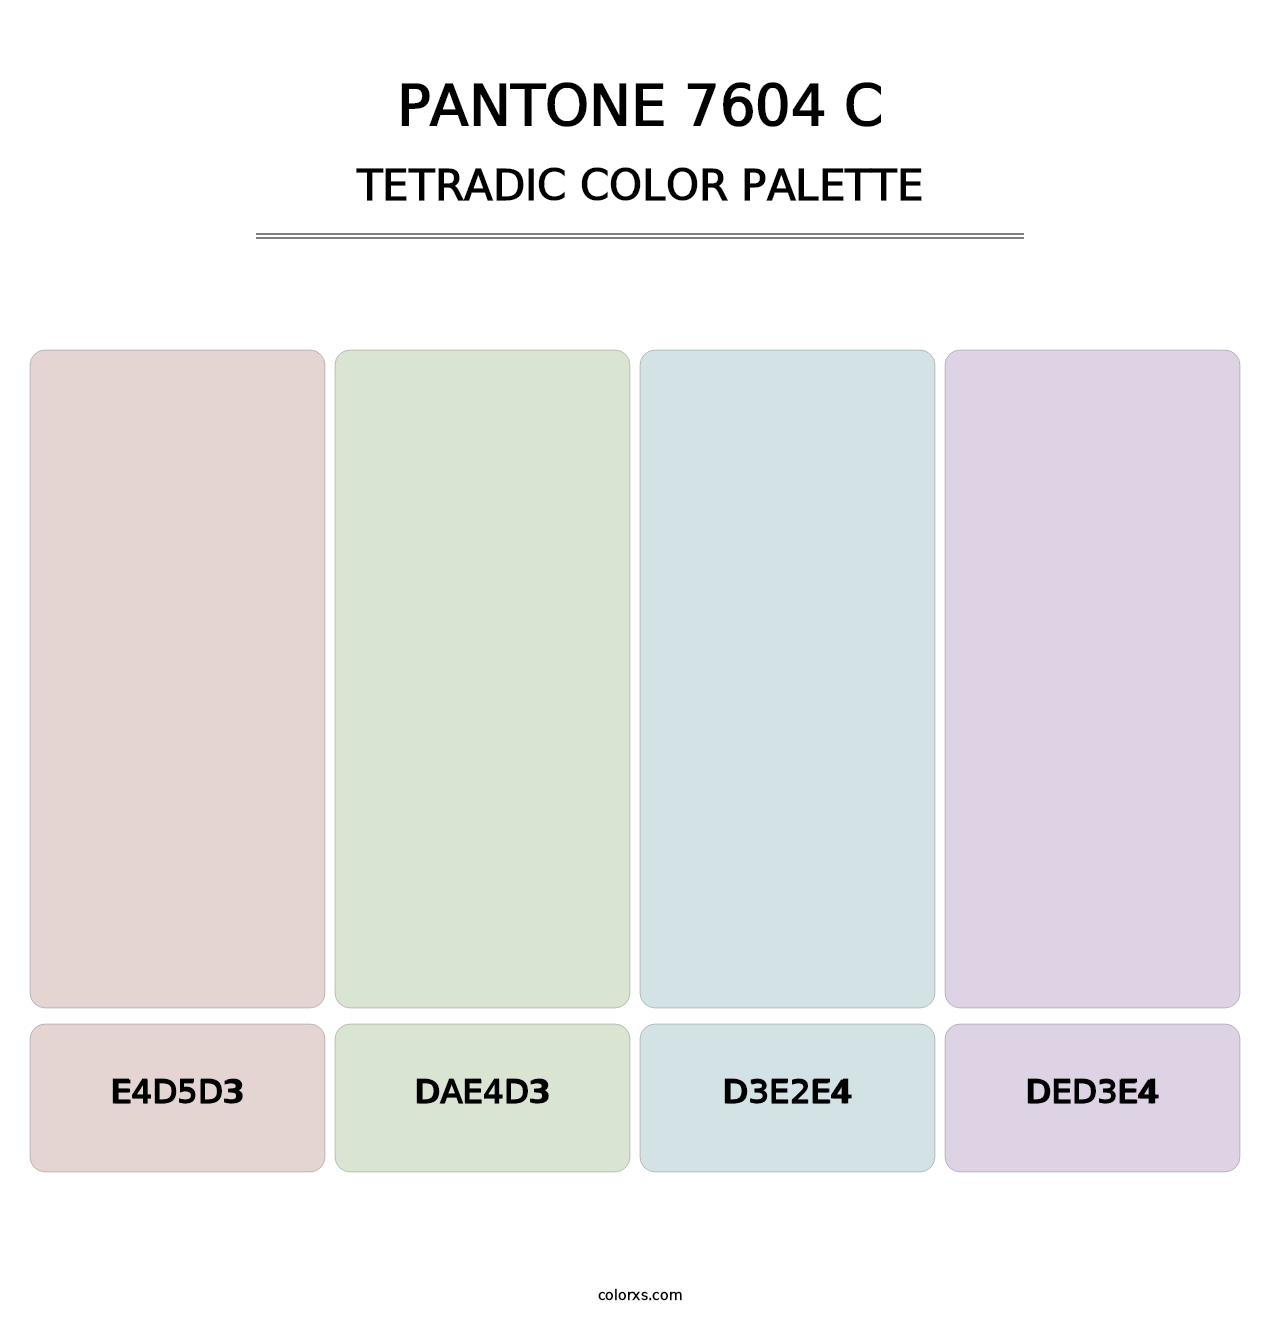 PANTONE 7604 C - Tetradic Color Palette